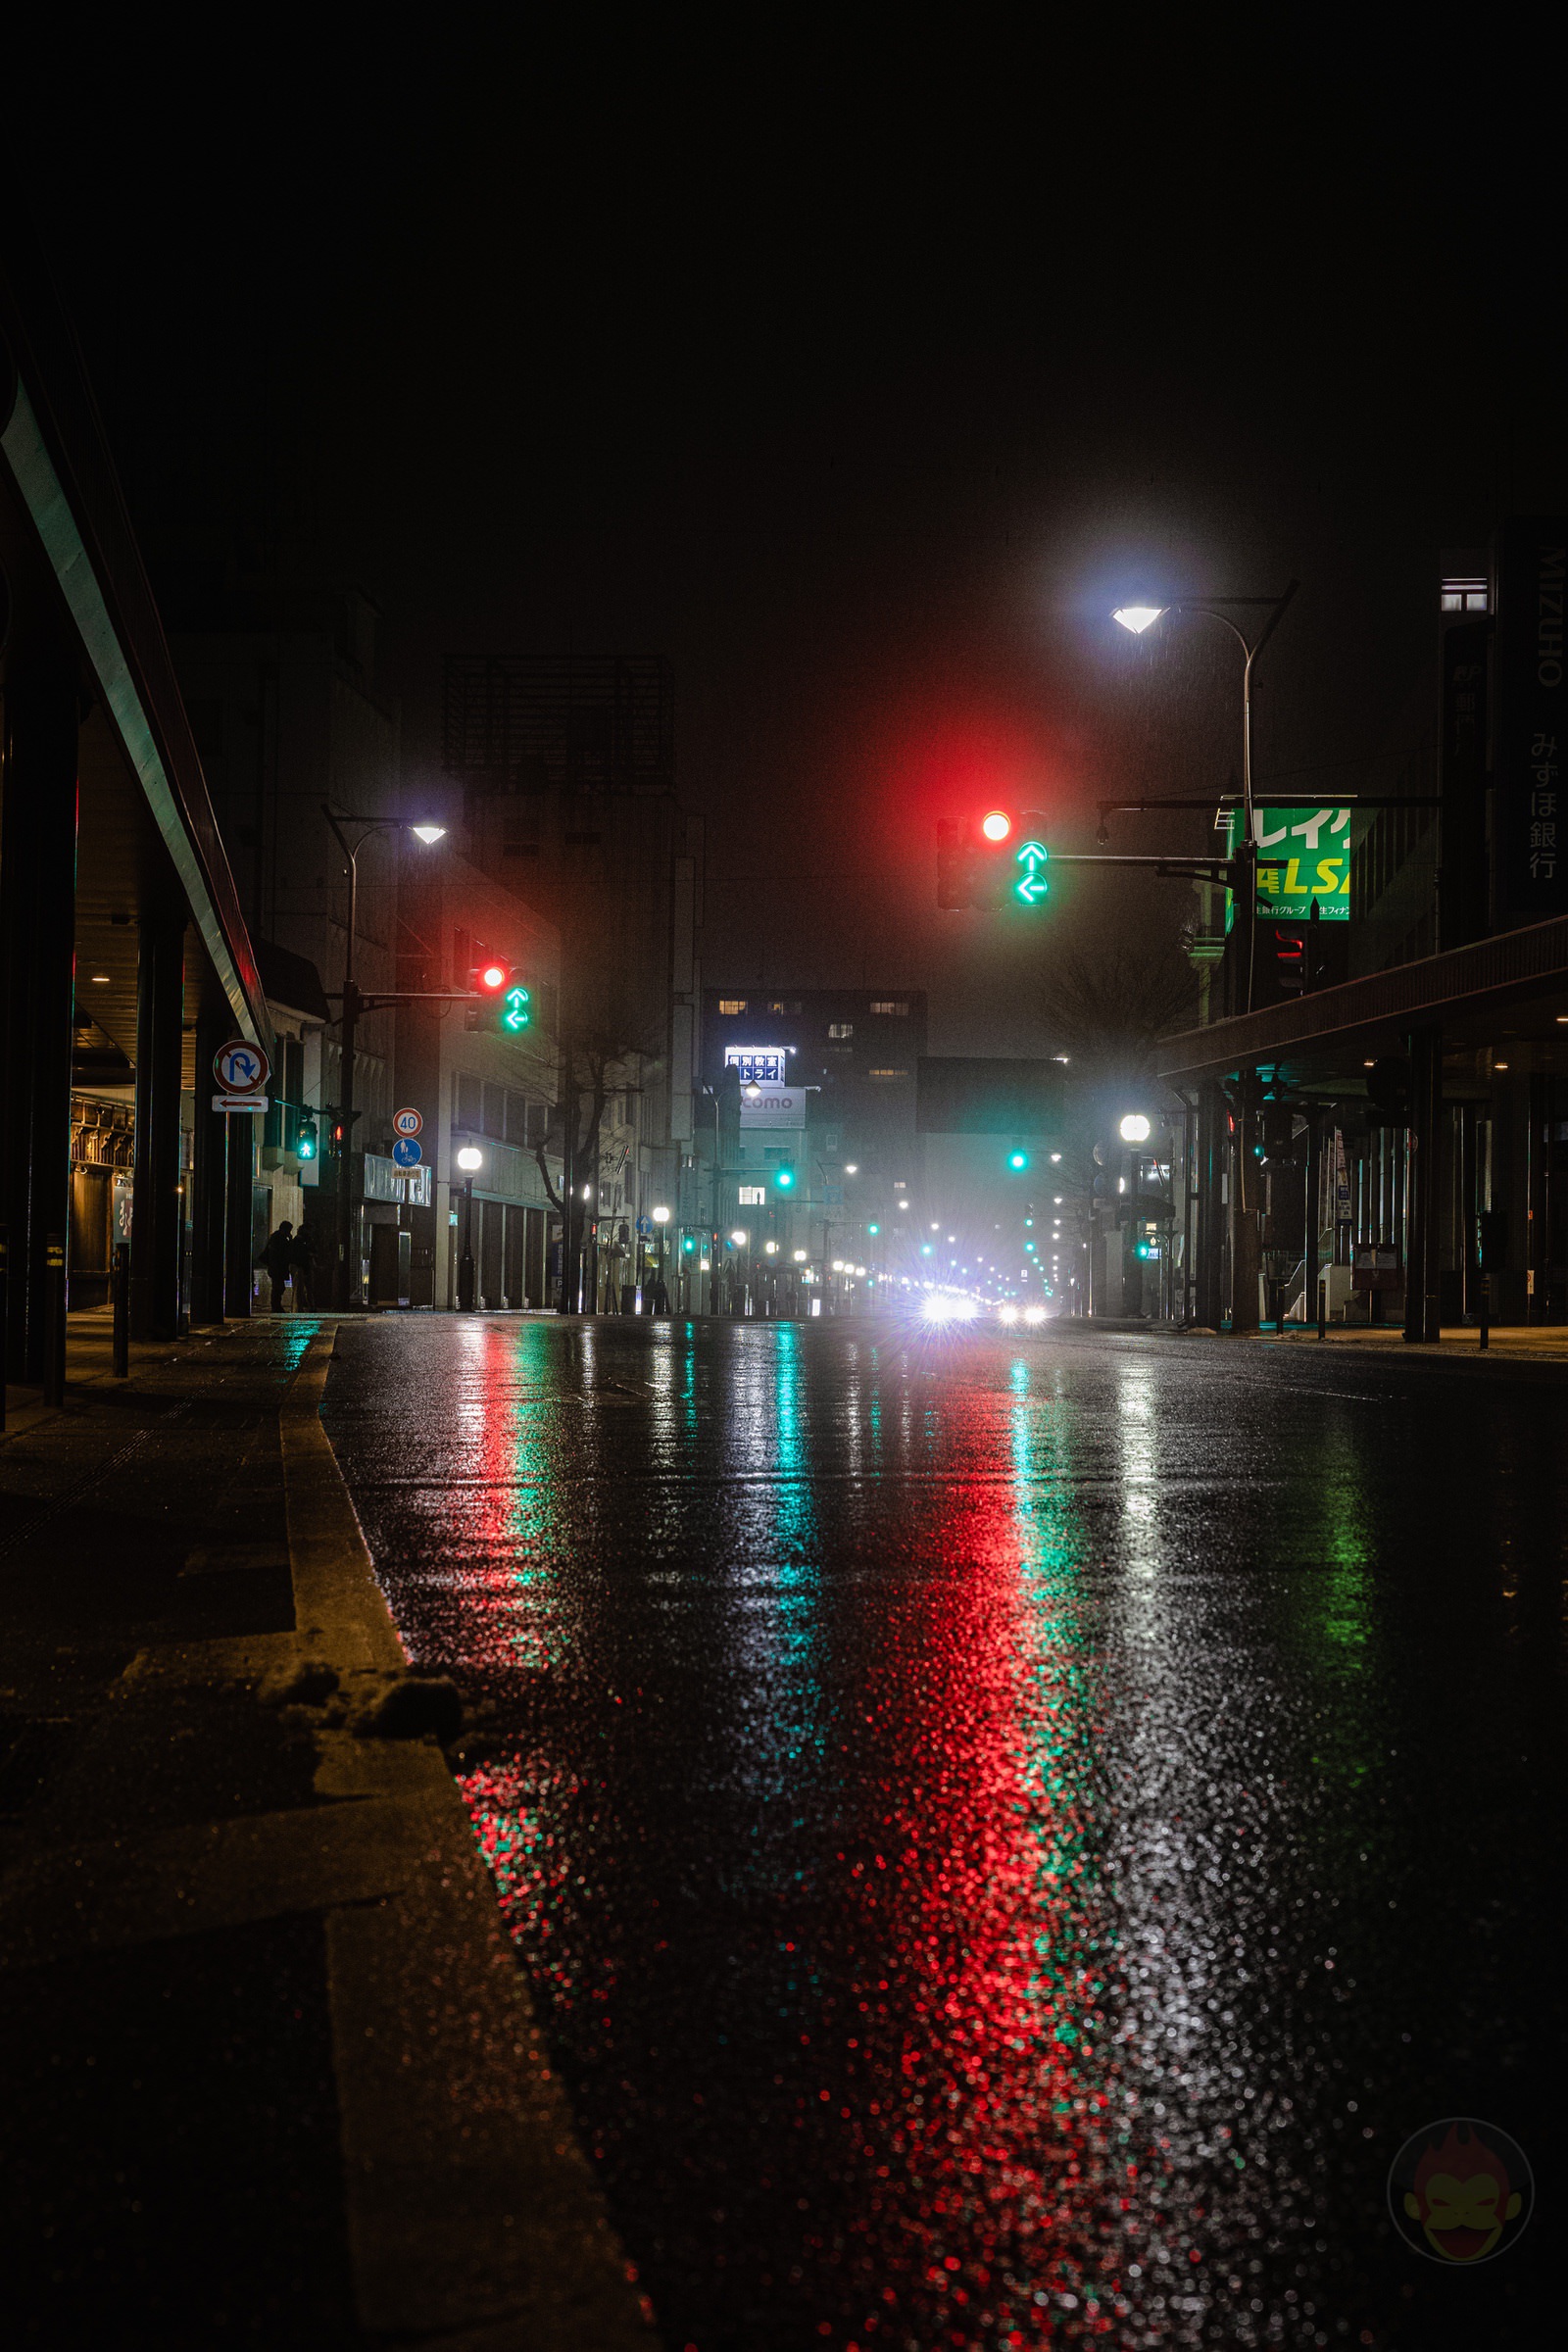 Aizu Wakamatsu night in the rain street photography 06